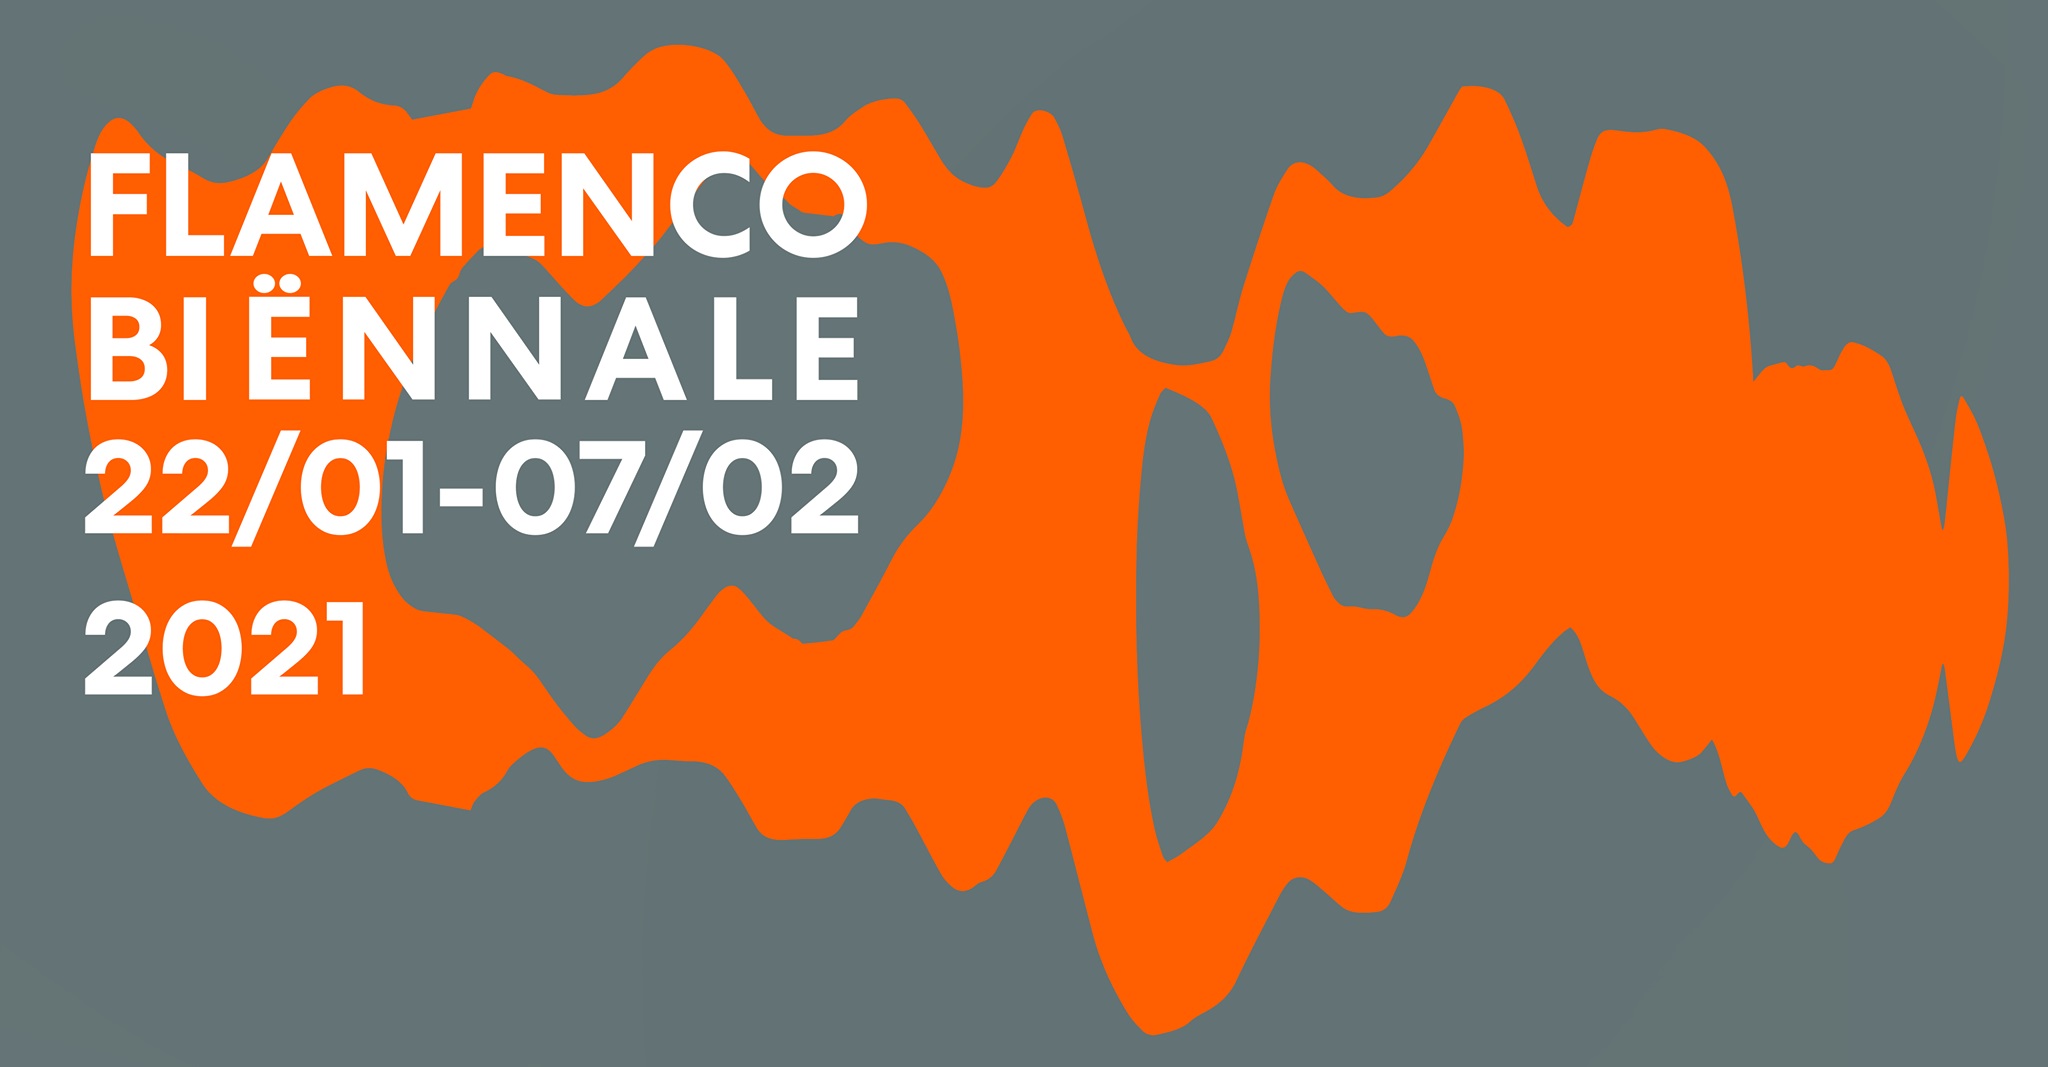 Bienal de Flamenco 2021 